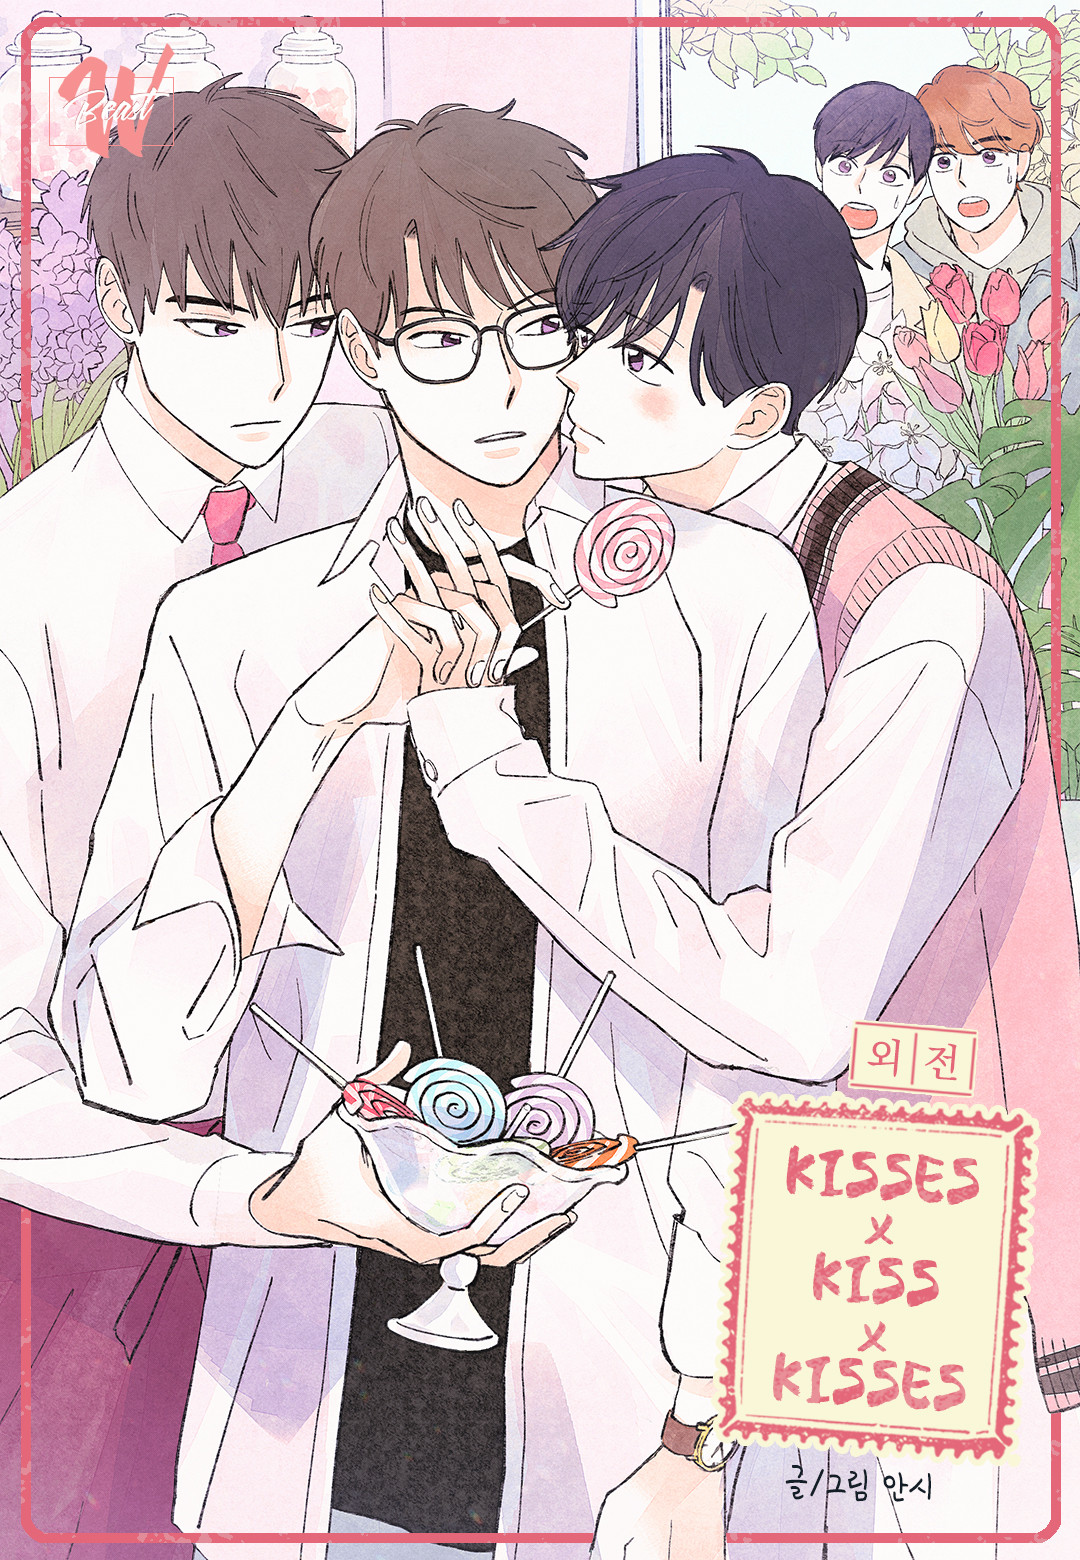 Kisses X Kiss X Kisses - Page 1